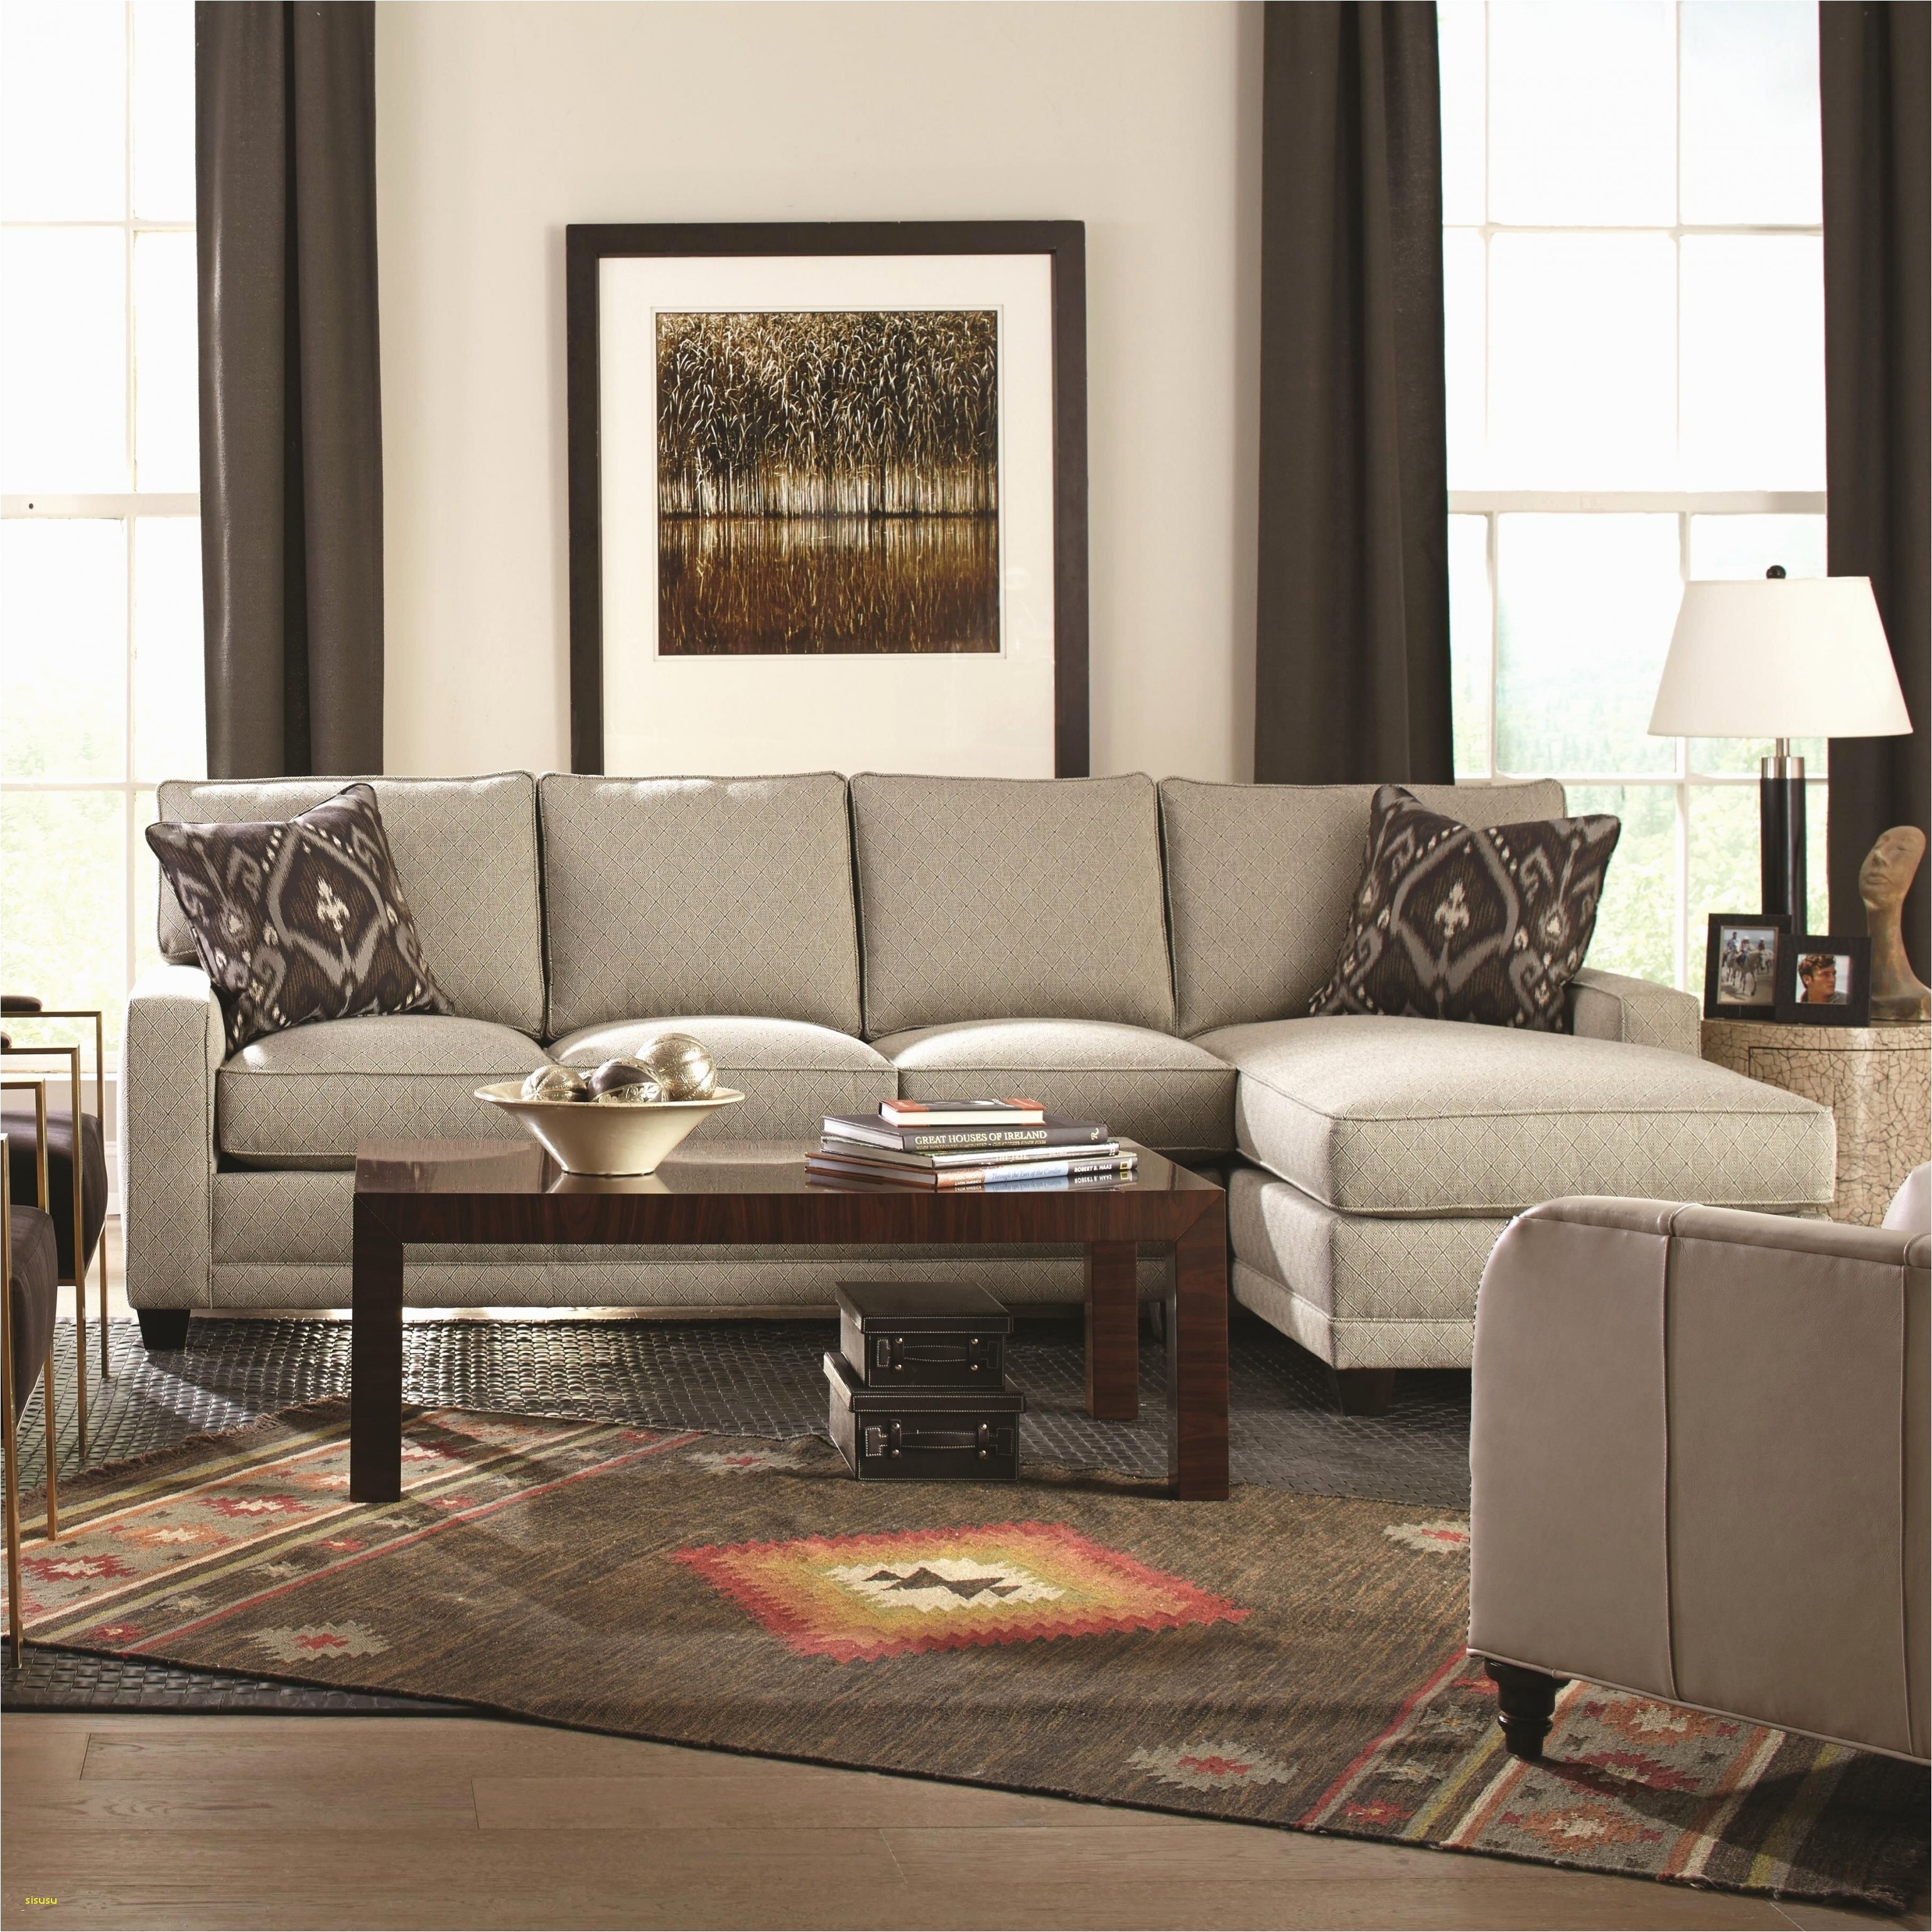 tall living room lamps elegant www big inspirational sofa big gunstige sofa macys furniture 0d